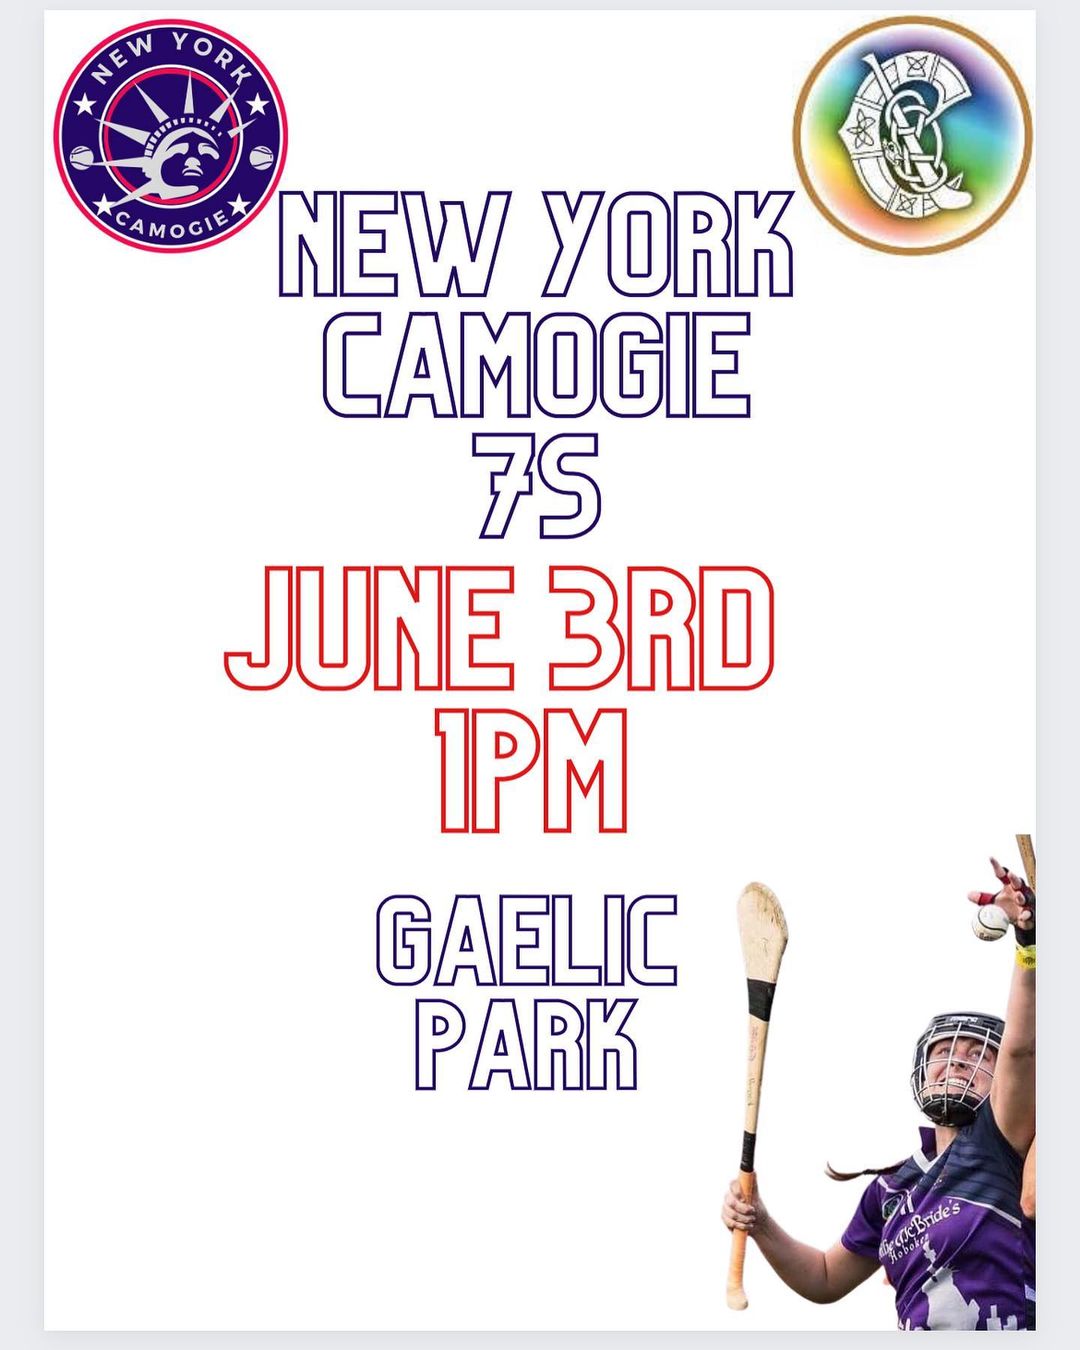 New York Camogie 7's Tournament